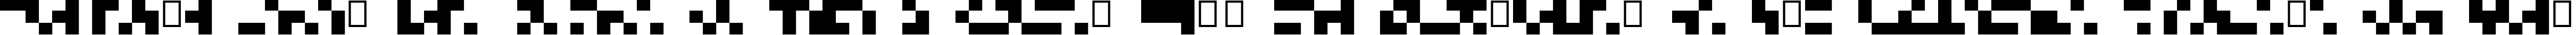 Пример написания шрифтом Arial Alternative Symbol текста на испанском